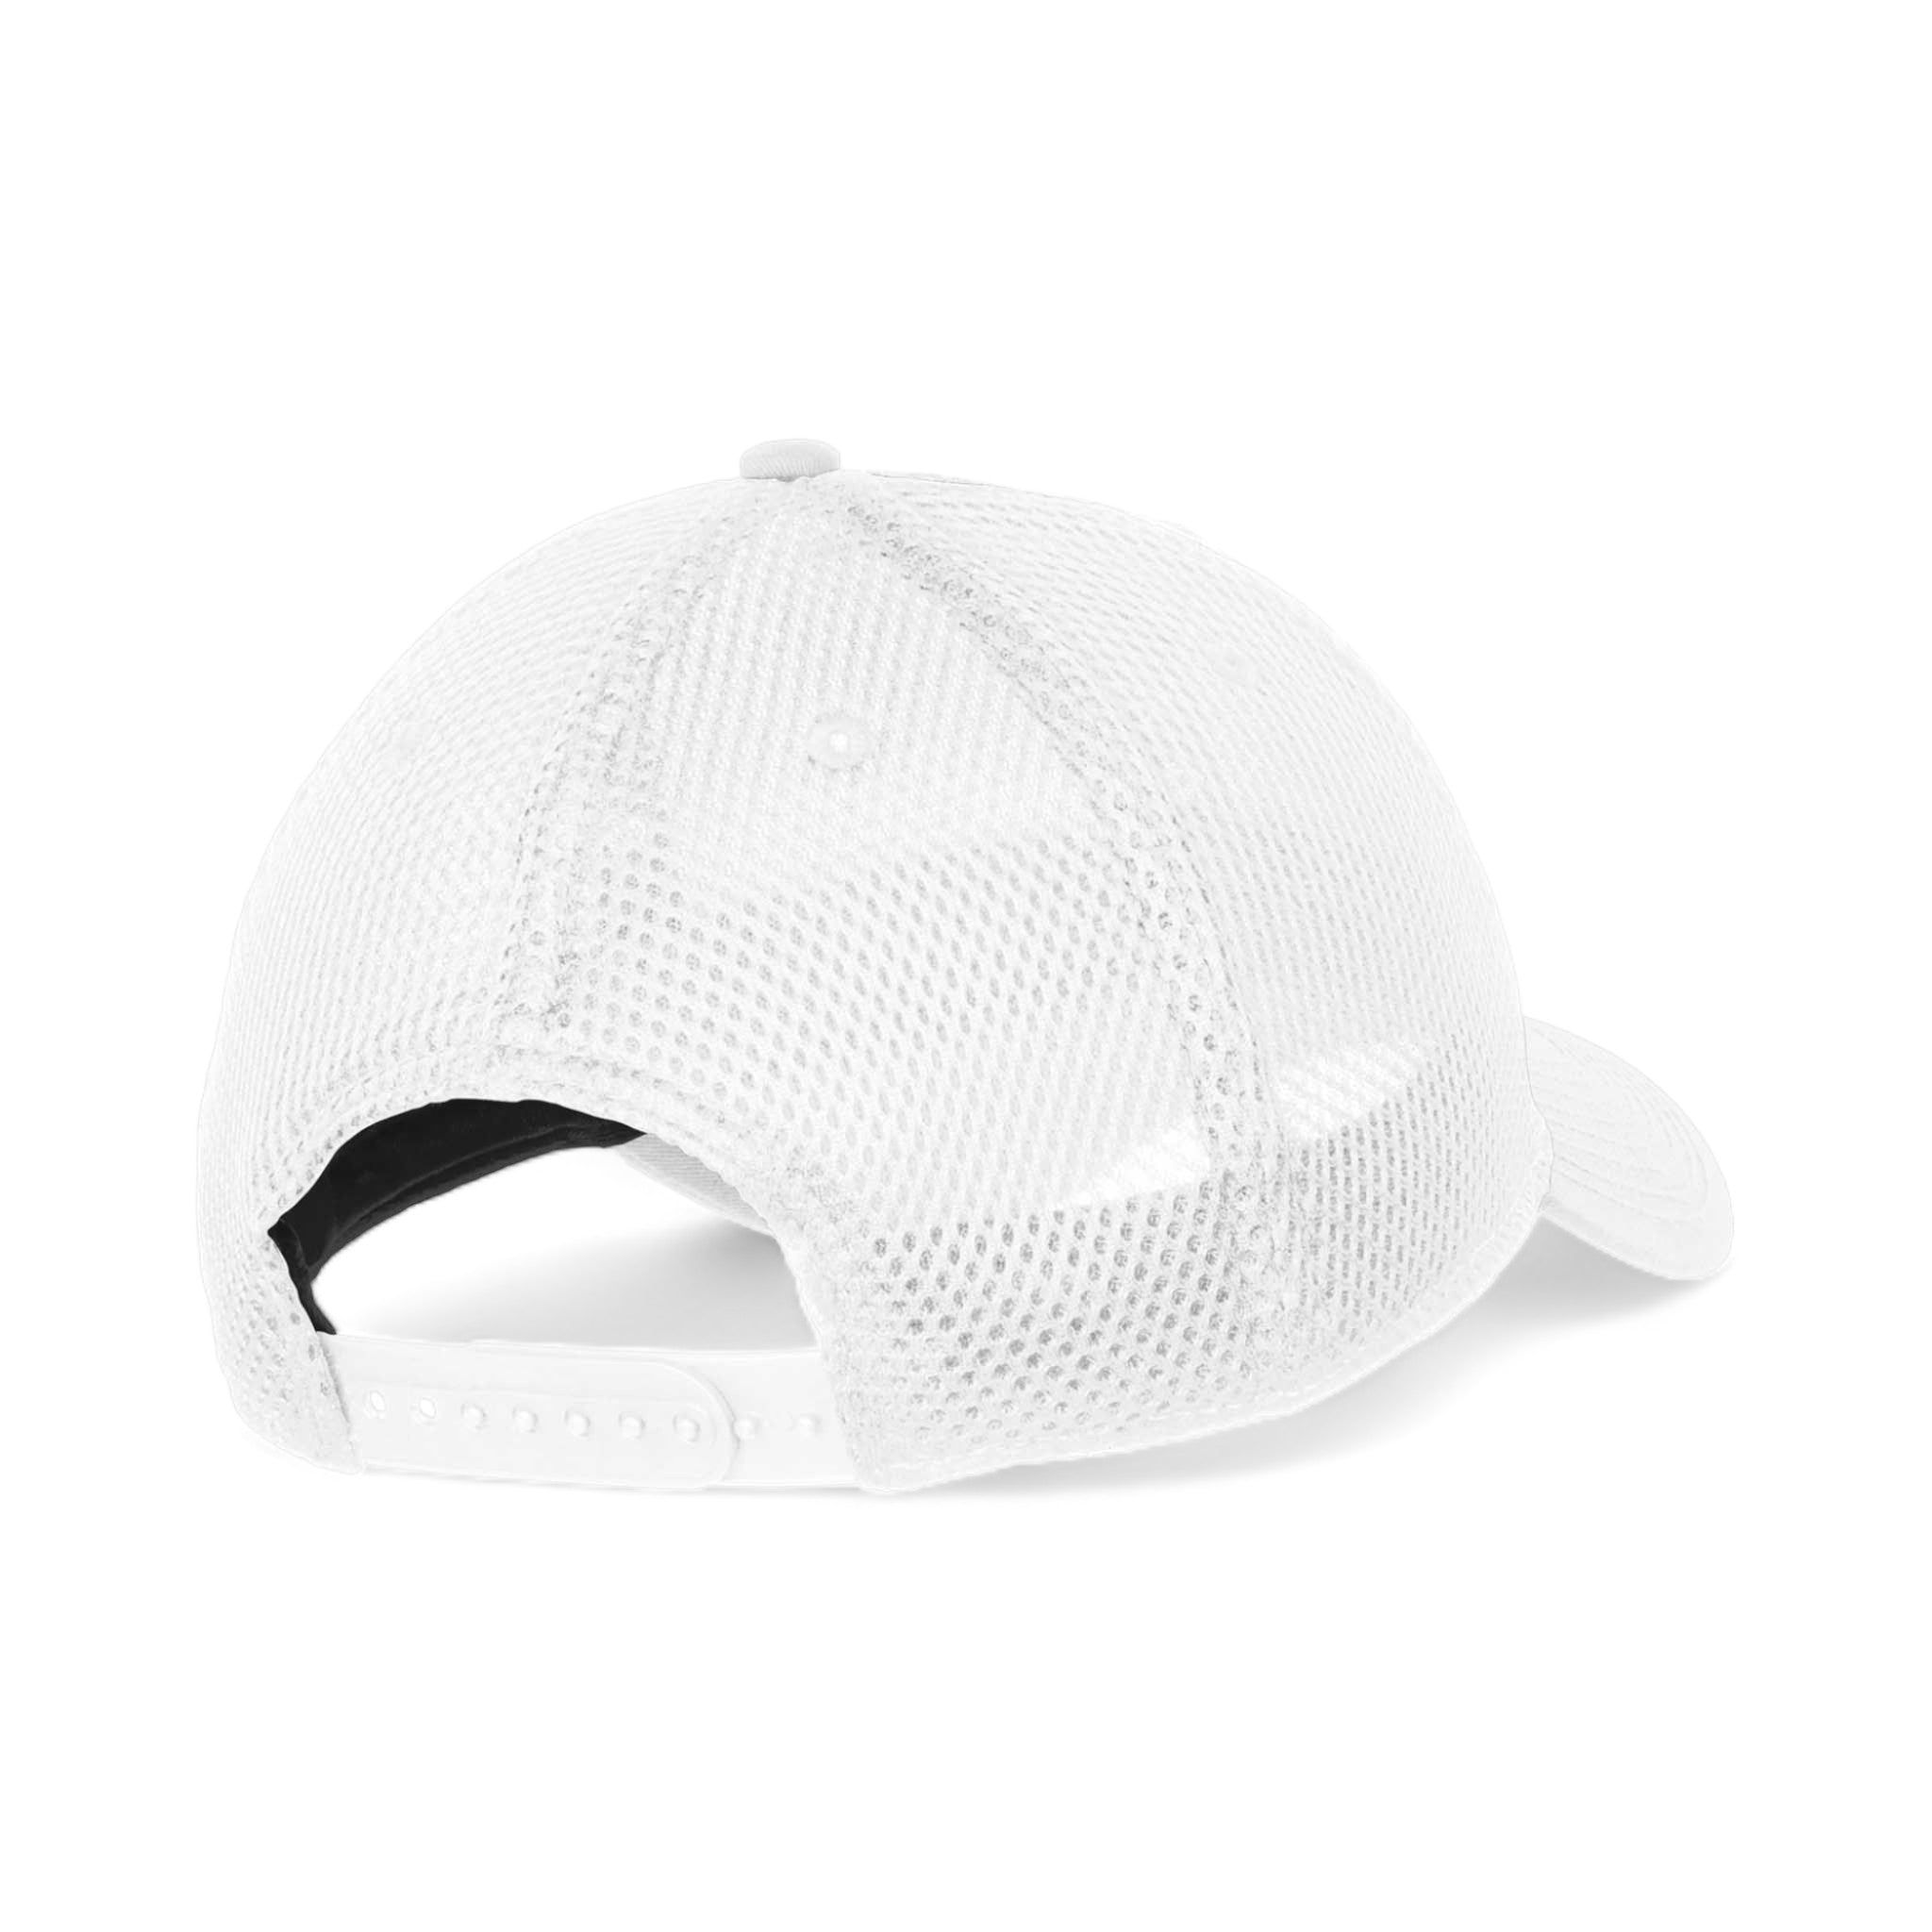 Back view of New Era NE204 custom hat in white and white